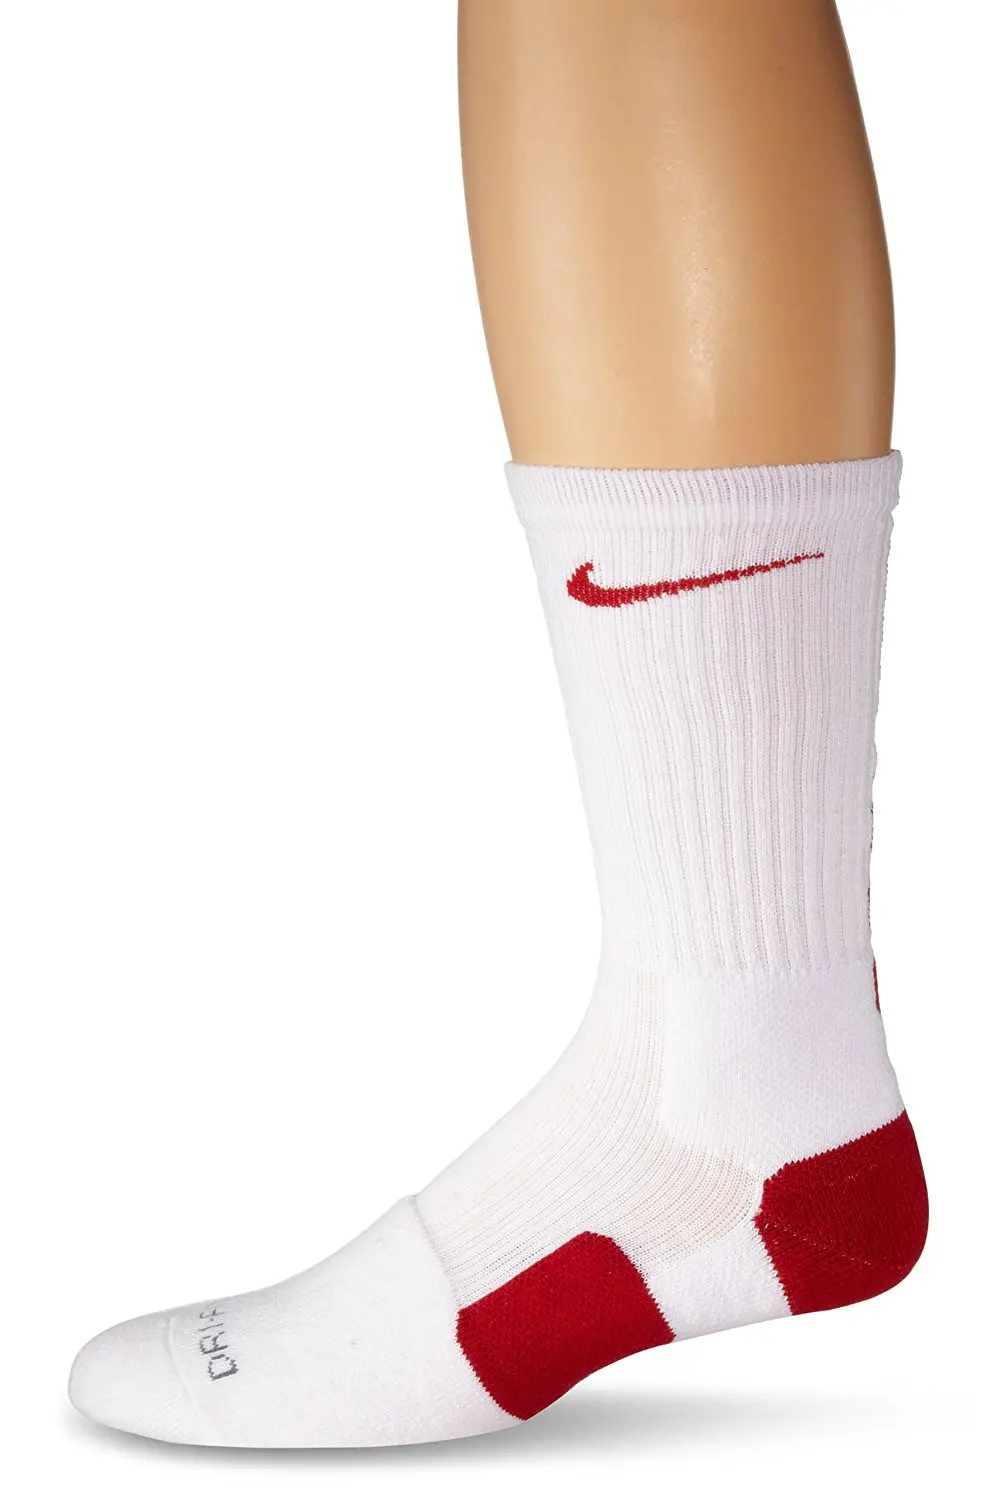 Buy Nike Dri-Fit Elite Basketball Socks 